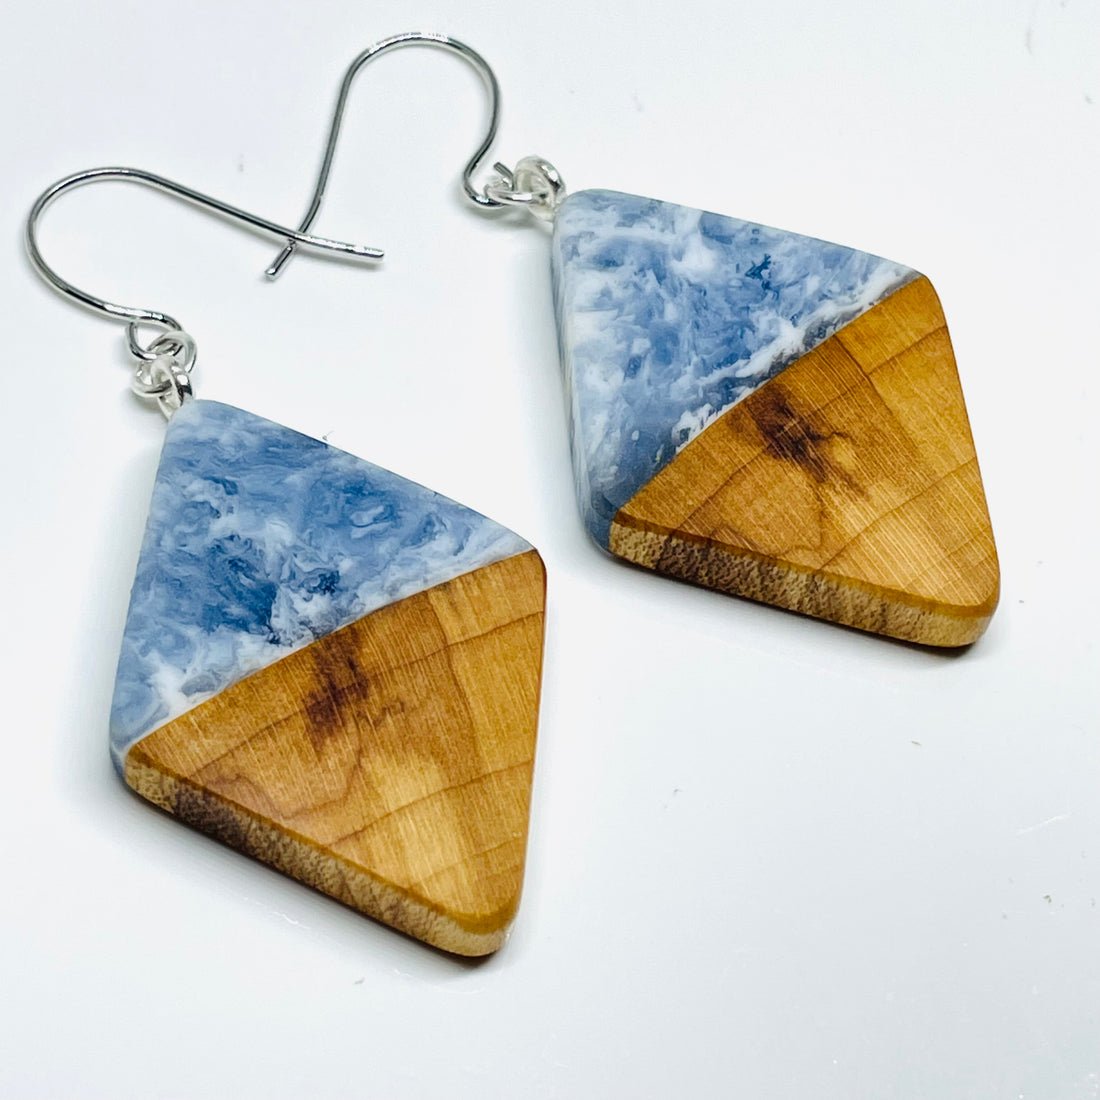 handmade jewelry, Minnesota local wood and resin artist. Ocean waves blue resin with maple wood, nickel free dangle earrings diamond shaped